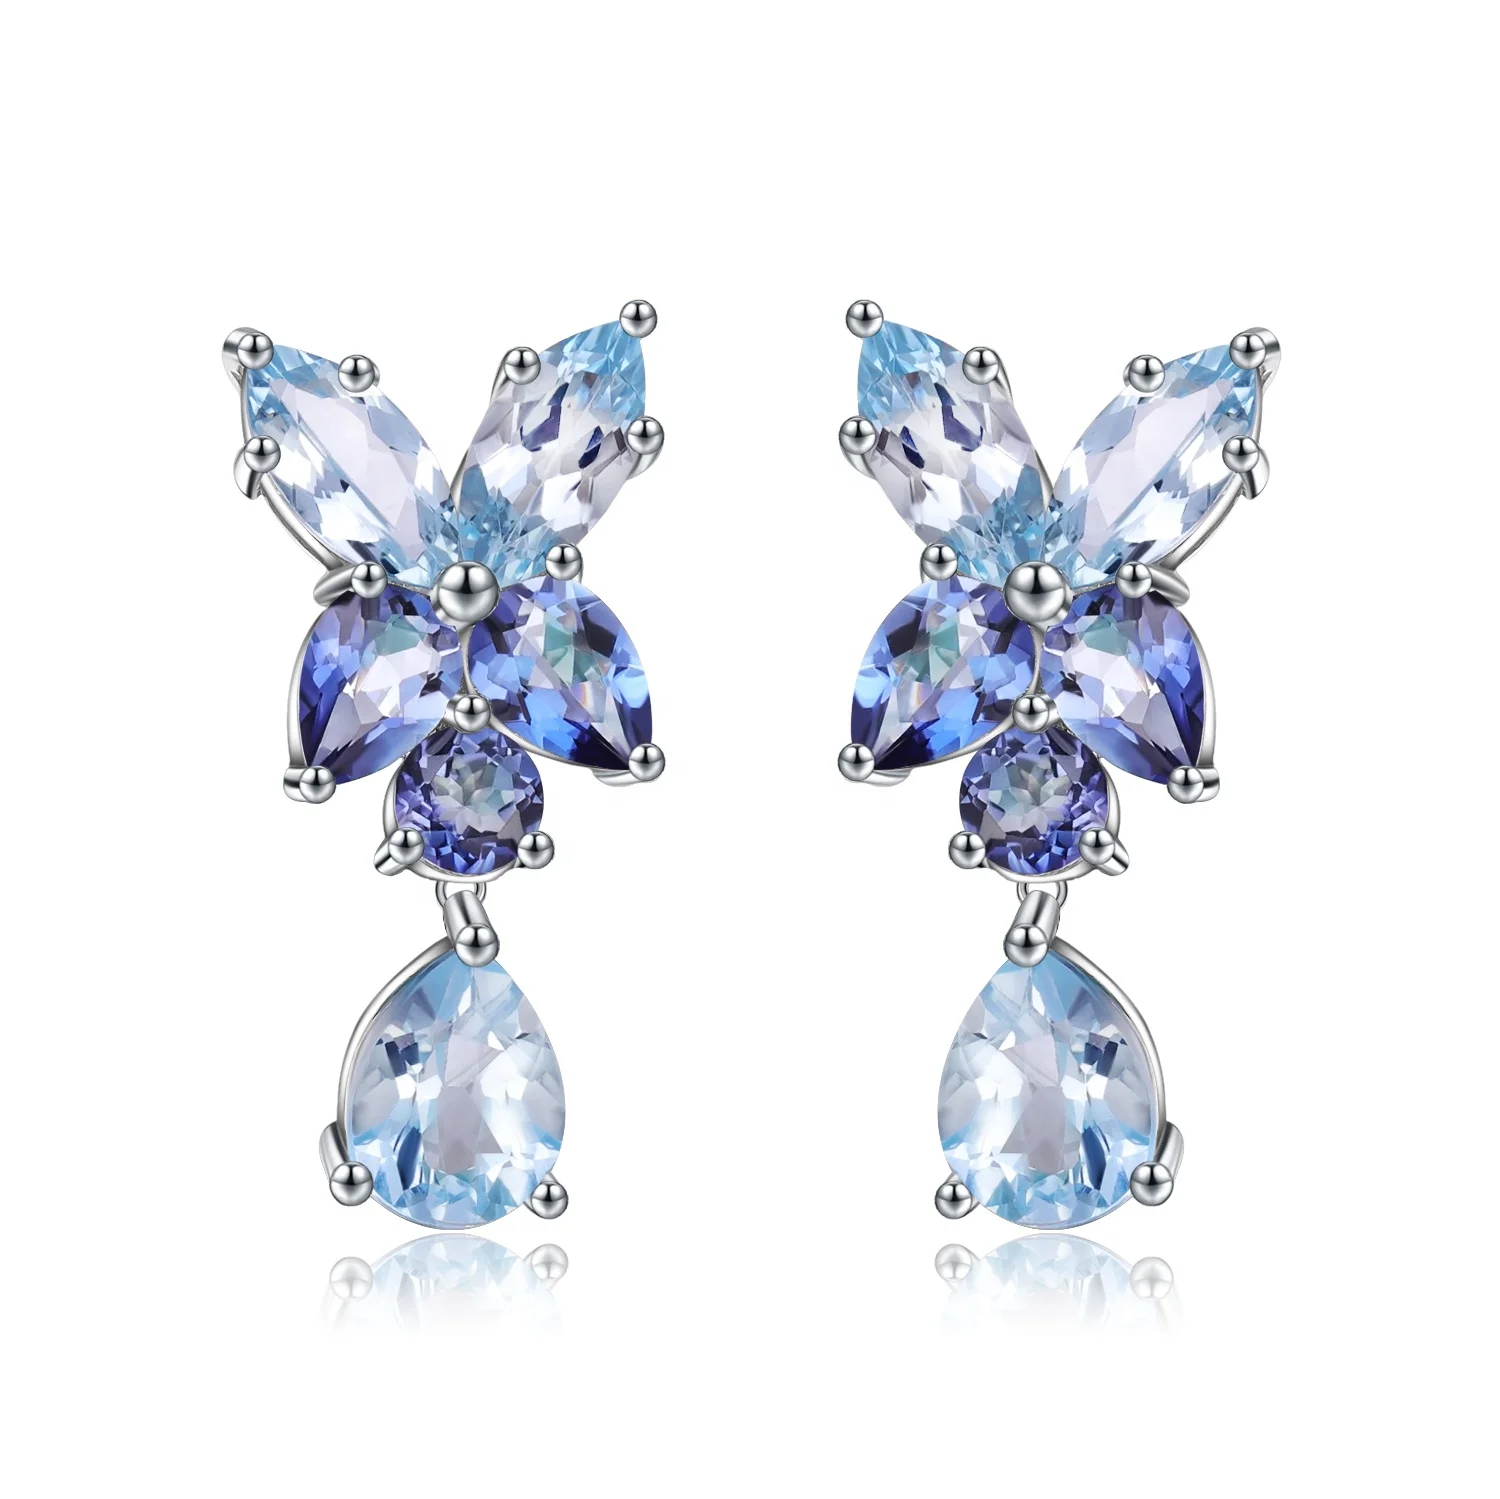 

Abiding Flower Natural Mystic Quartz Sky Blue Topaz Gemstone Boho Fashion Jewelry Earring Sterling Silver